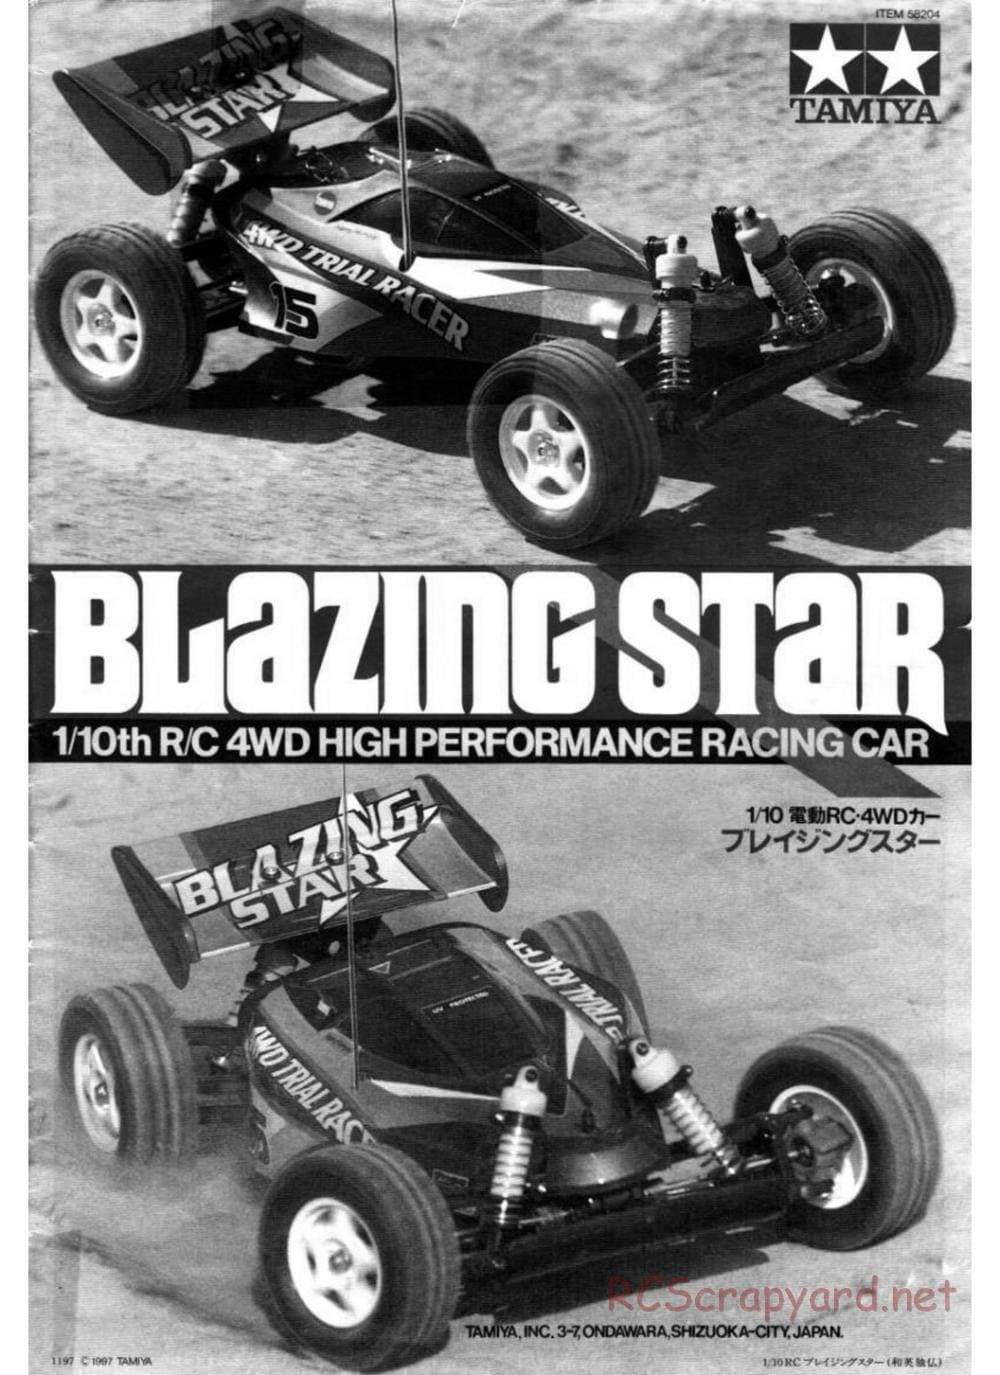 Tamiya - Blazing Star Chassis - Manual - Page 1